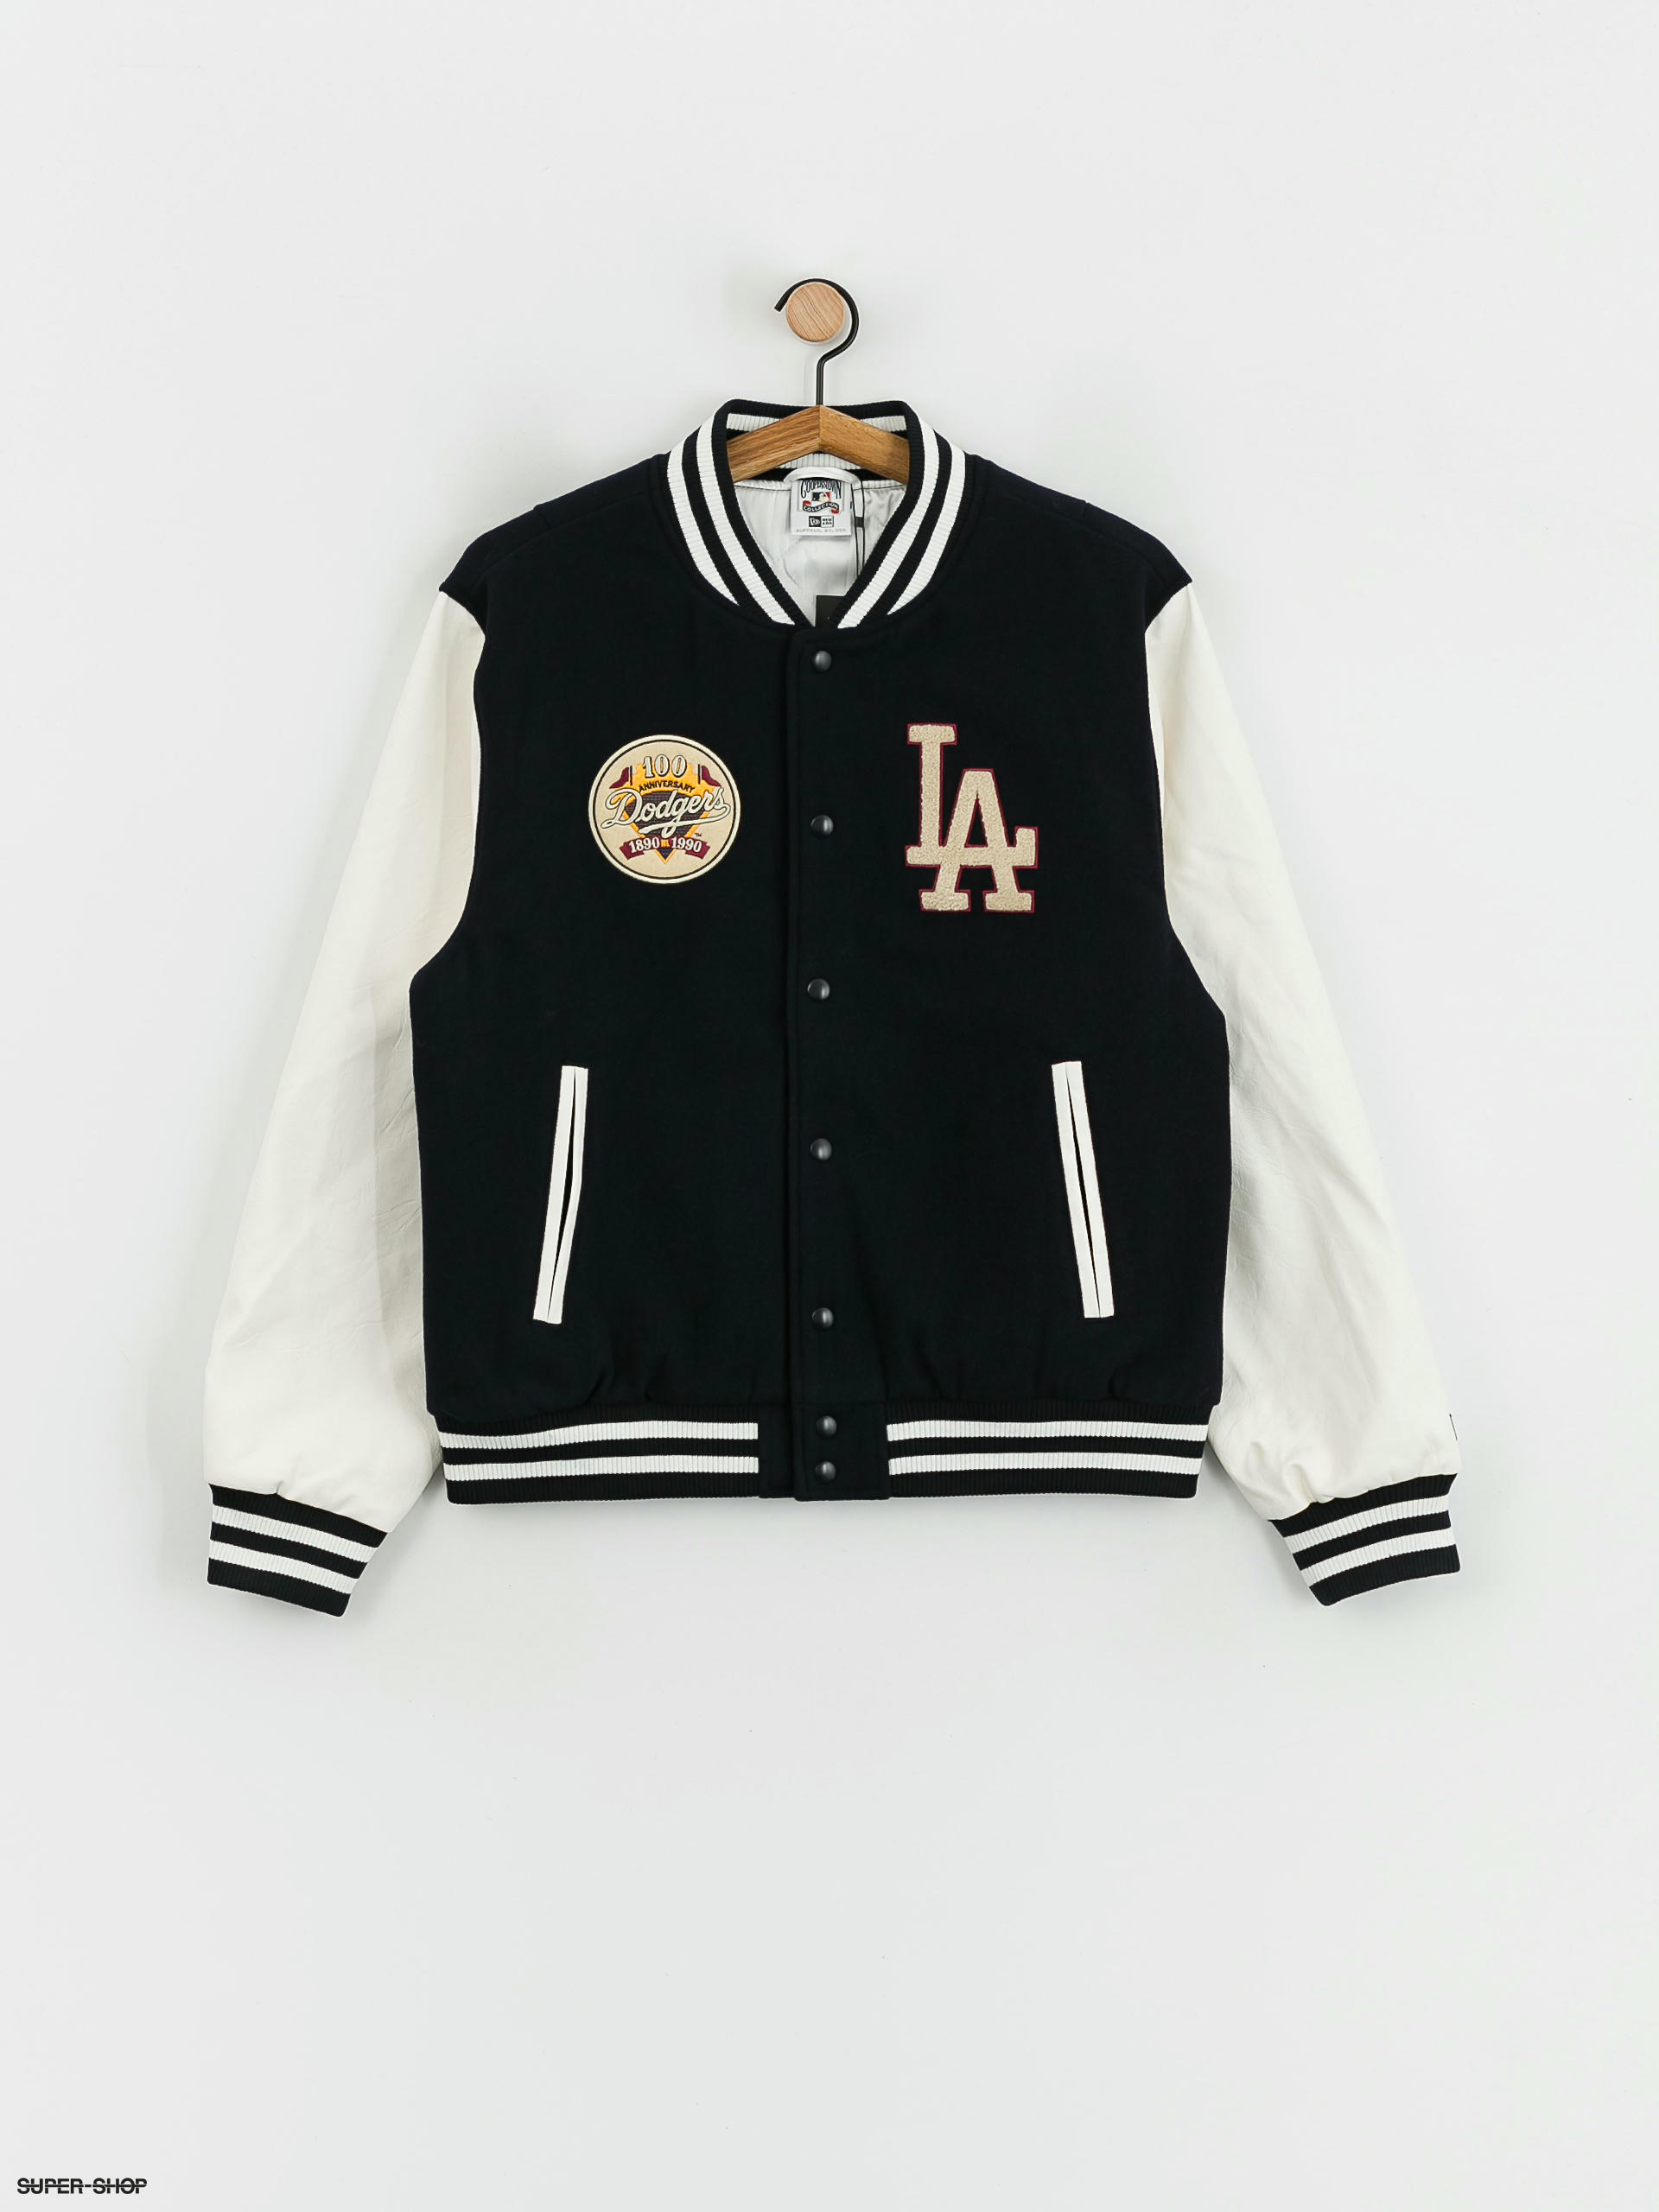 New Era MLB Varsity Los Angeles Dodgers Jacket (navy/off white)